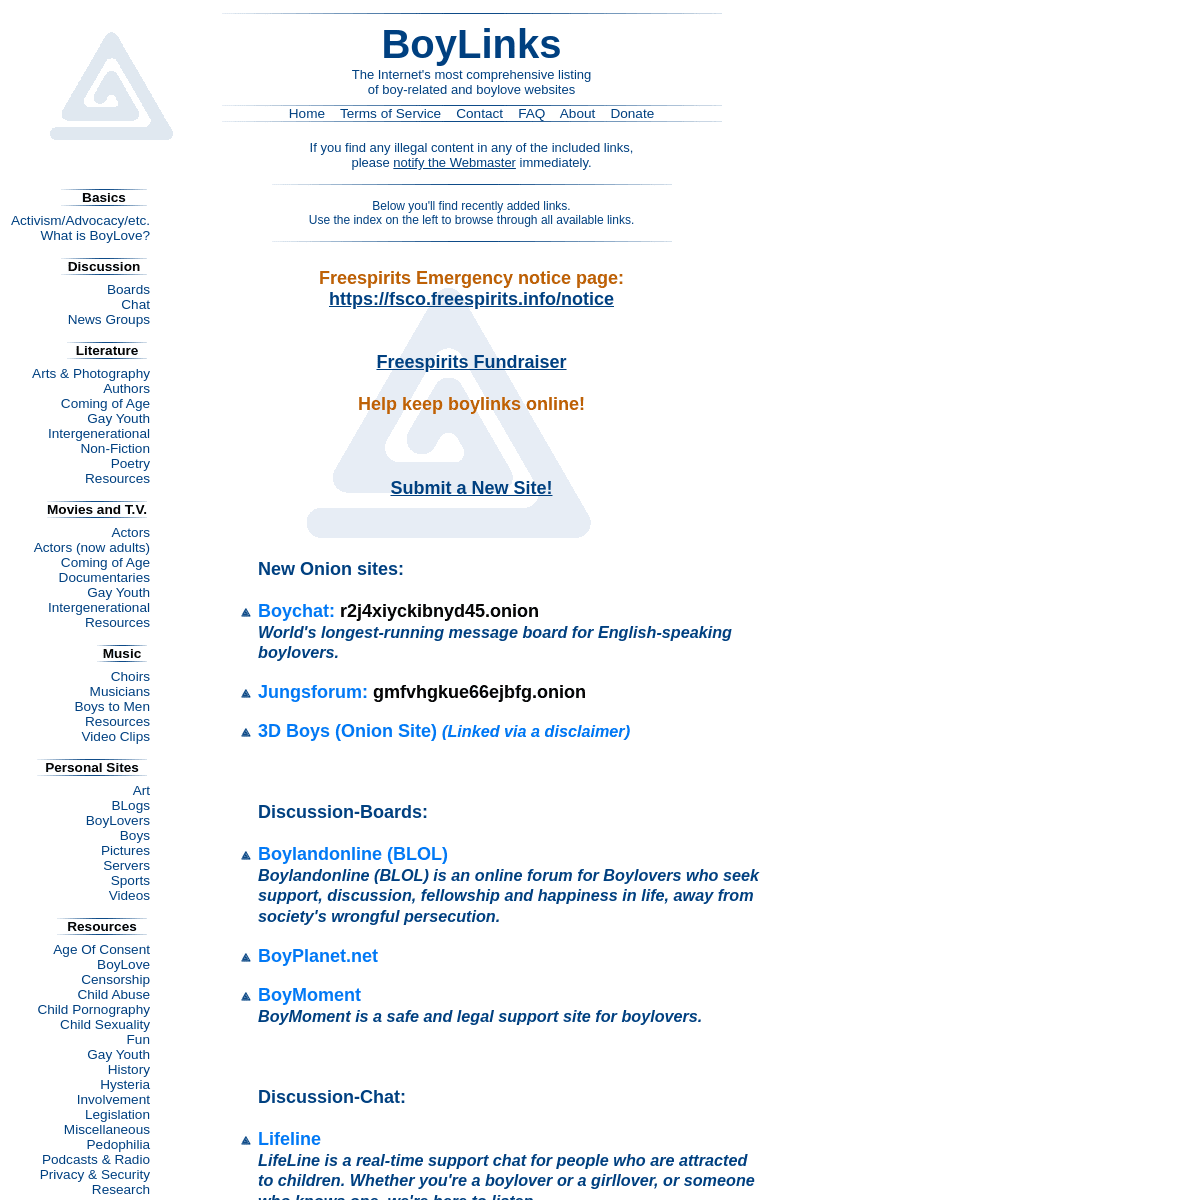 A complete backup of boylinks.net